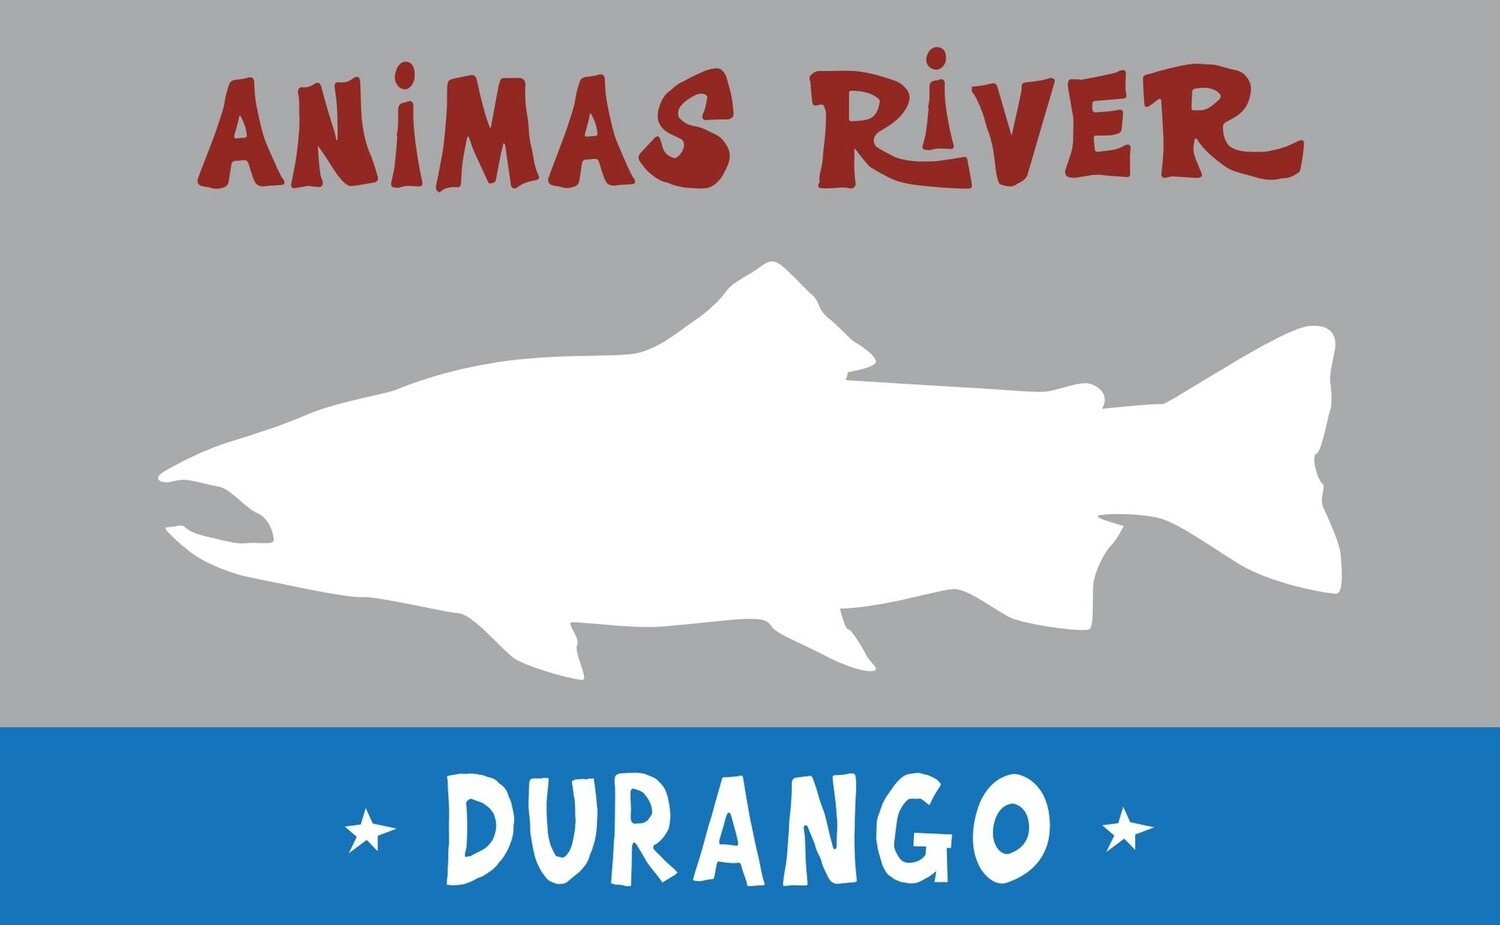 ANIMAS RIVER TROUT DURANGO | STICKER